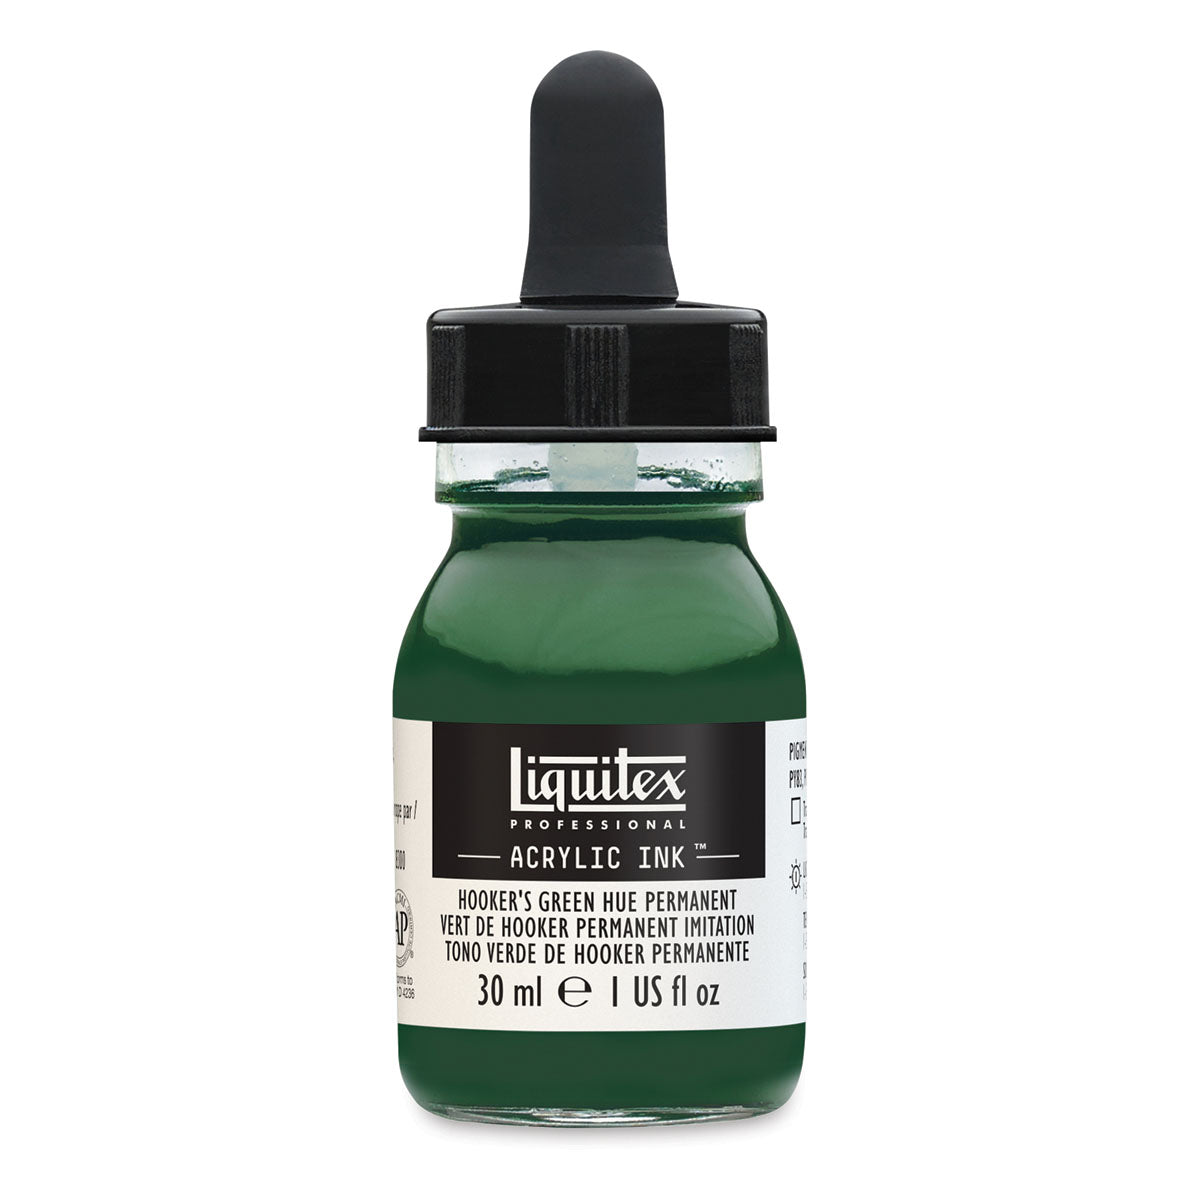 Liquitex Acrylic Ink Hooker's Green Hue Permanent